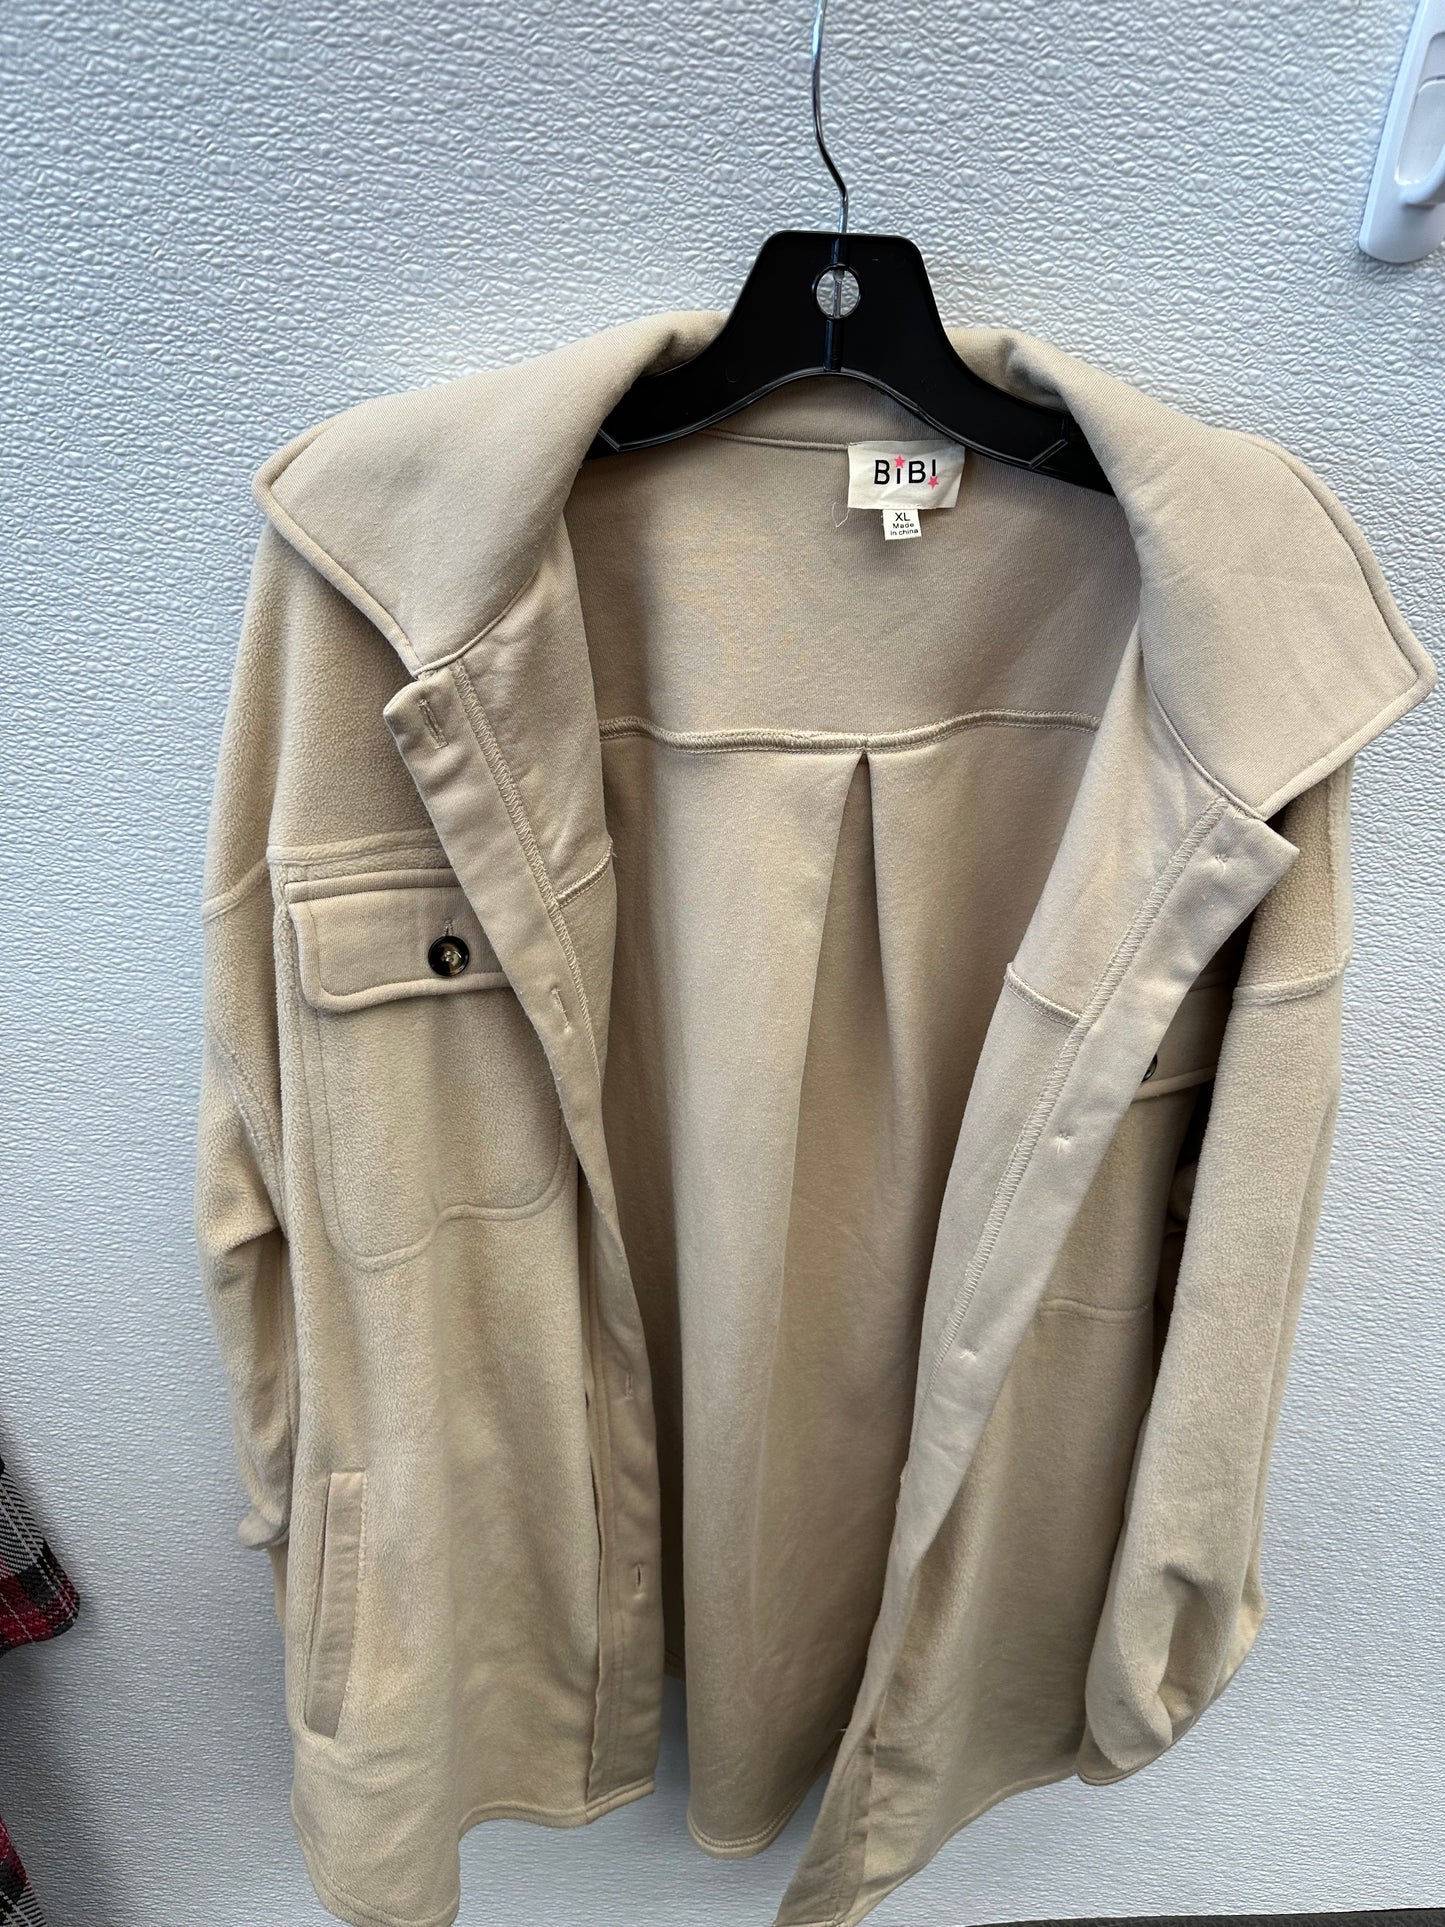 Jacket Fleece By Bibi  Size: Xl